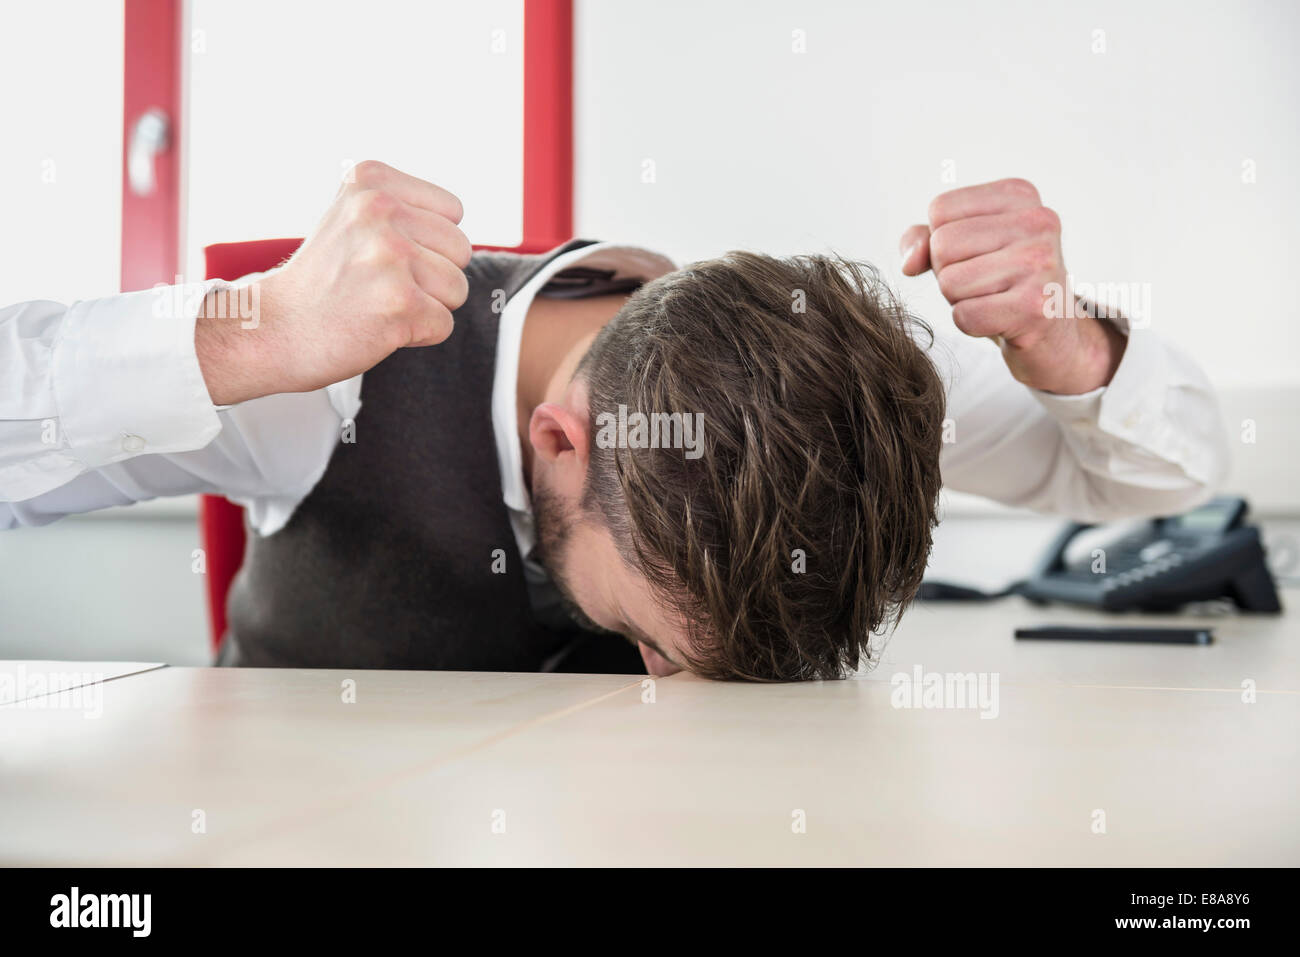 Man office stress problem fist hitting desk Stock Photo - Alamy